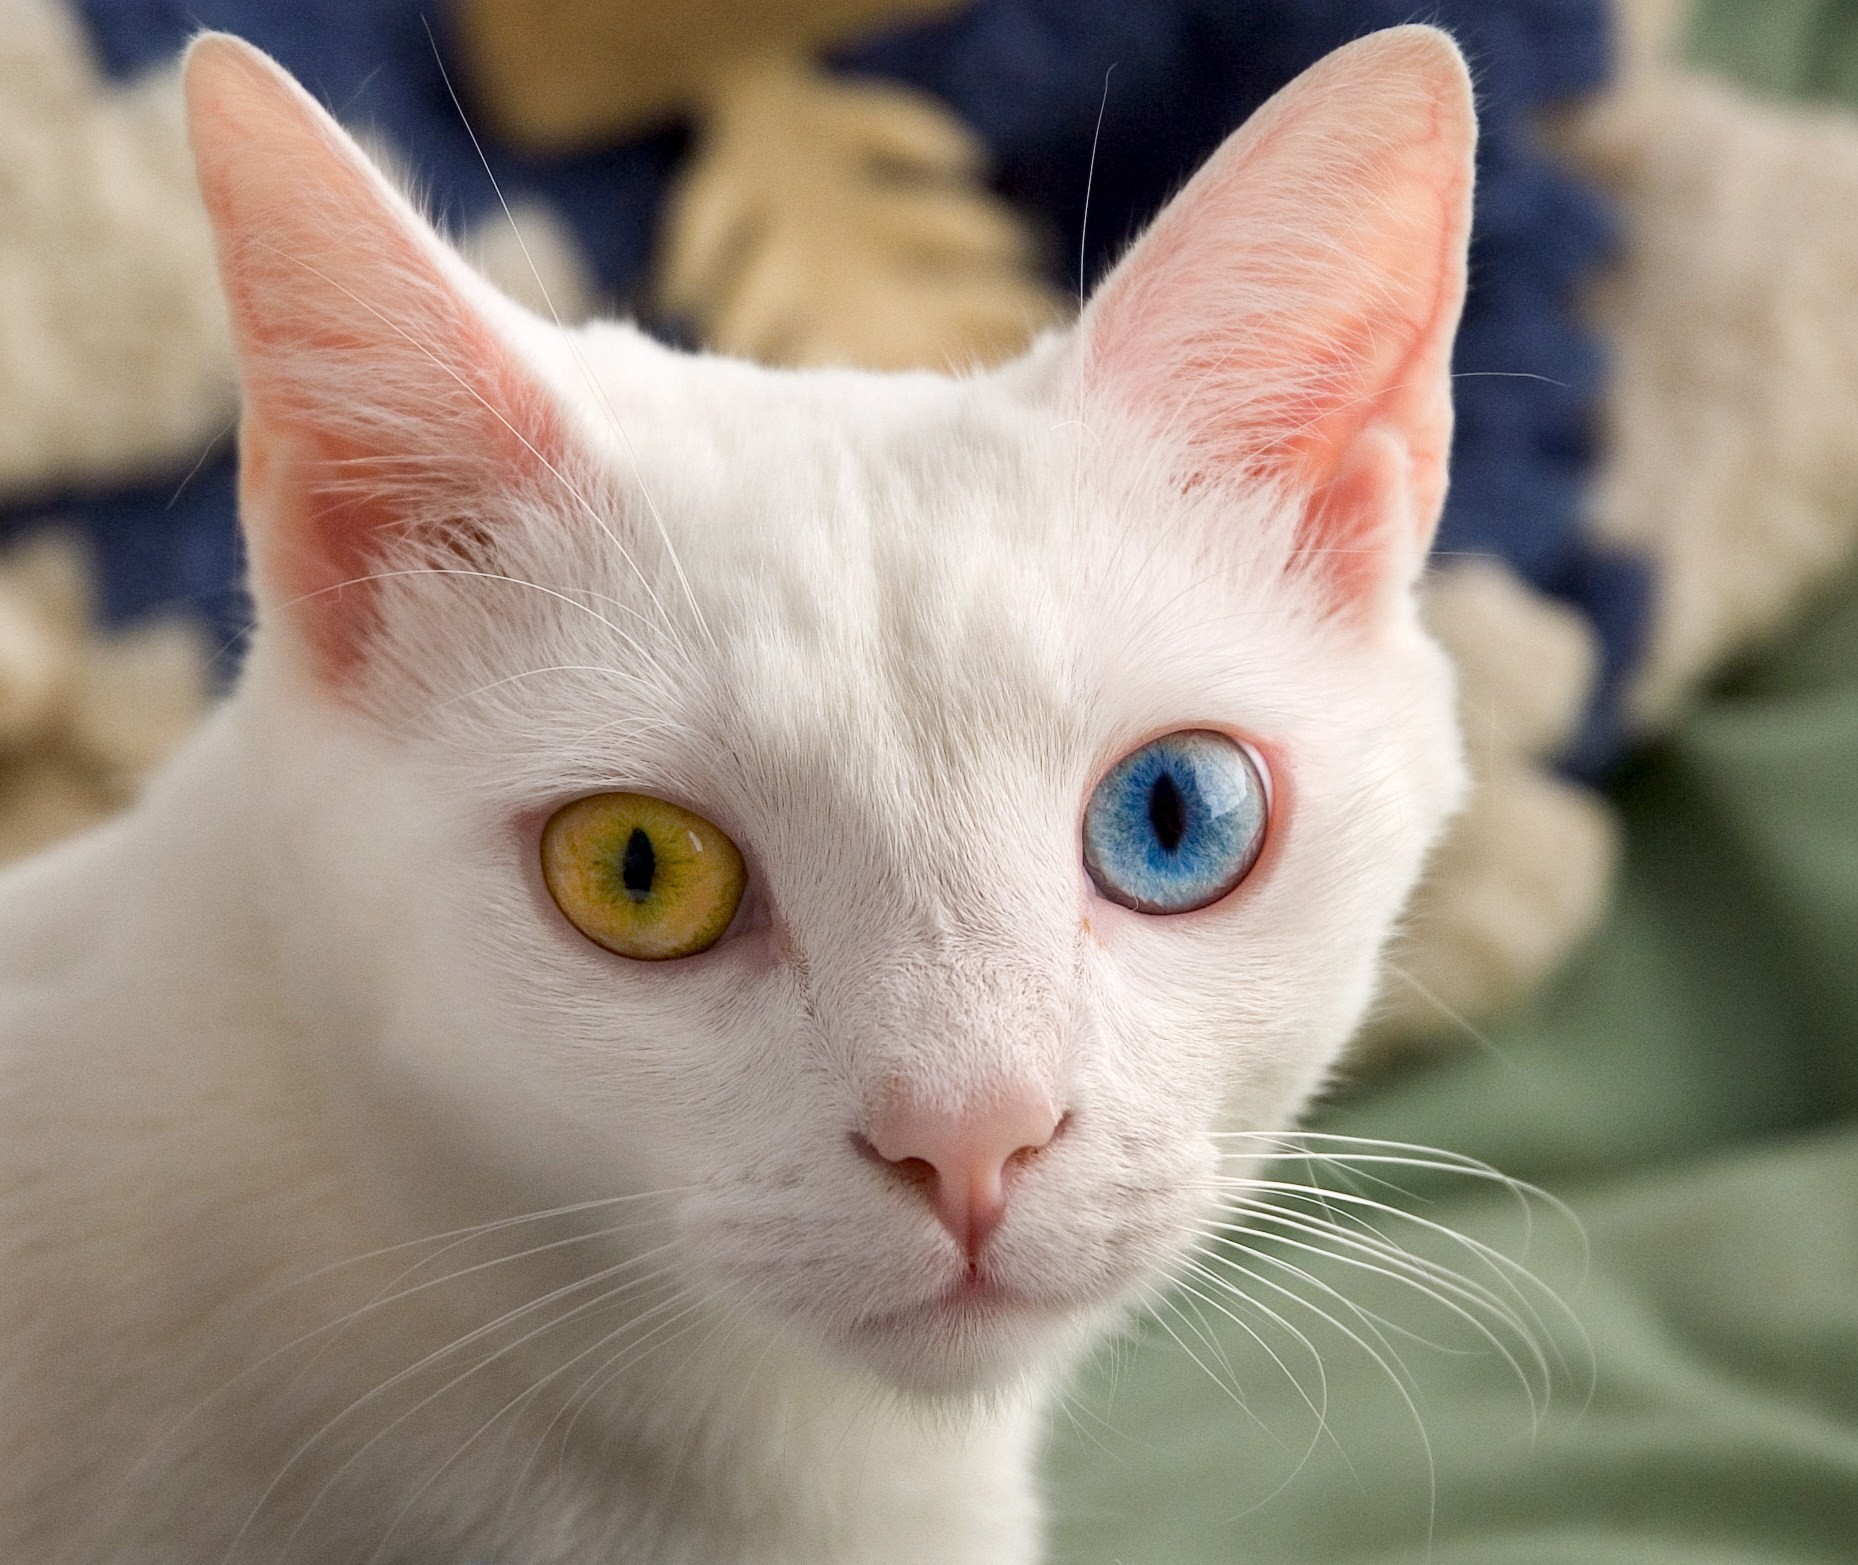 Odd eyed cat